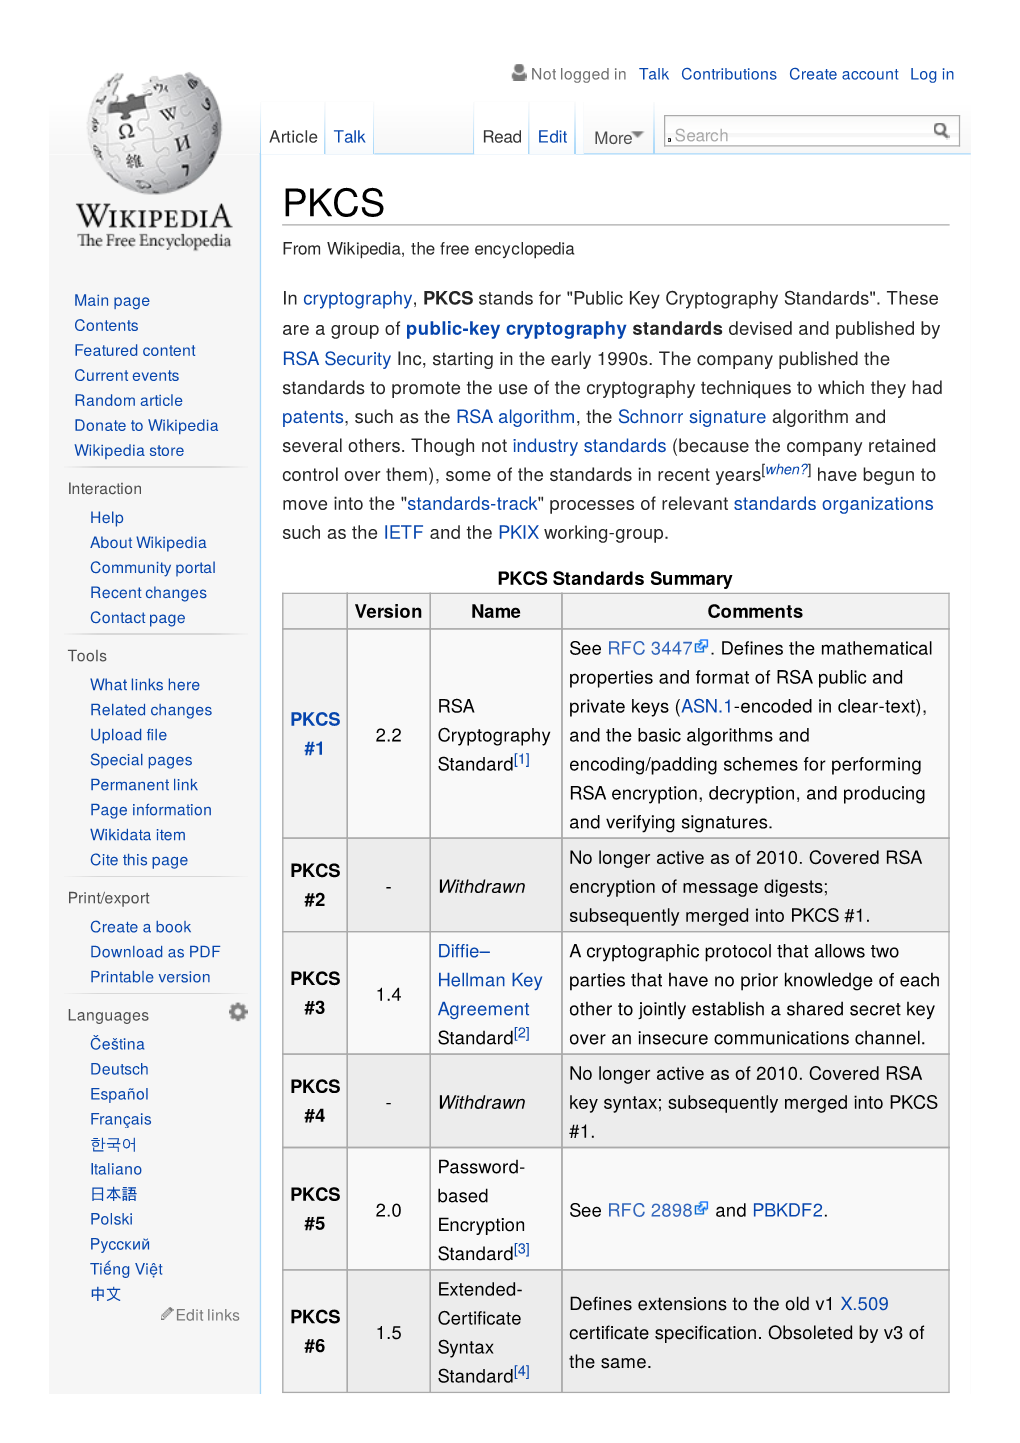 PKCS from Wikipedia, the Free Encyclopedia